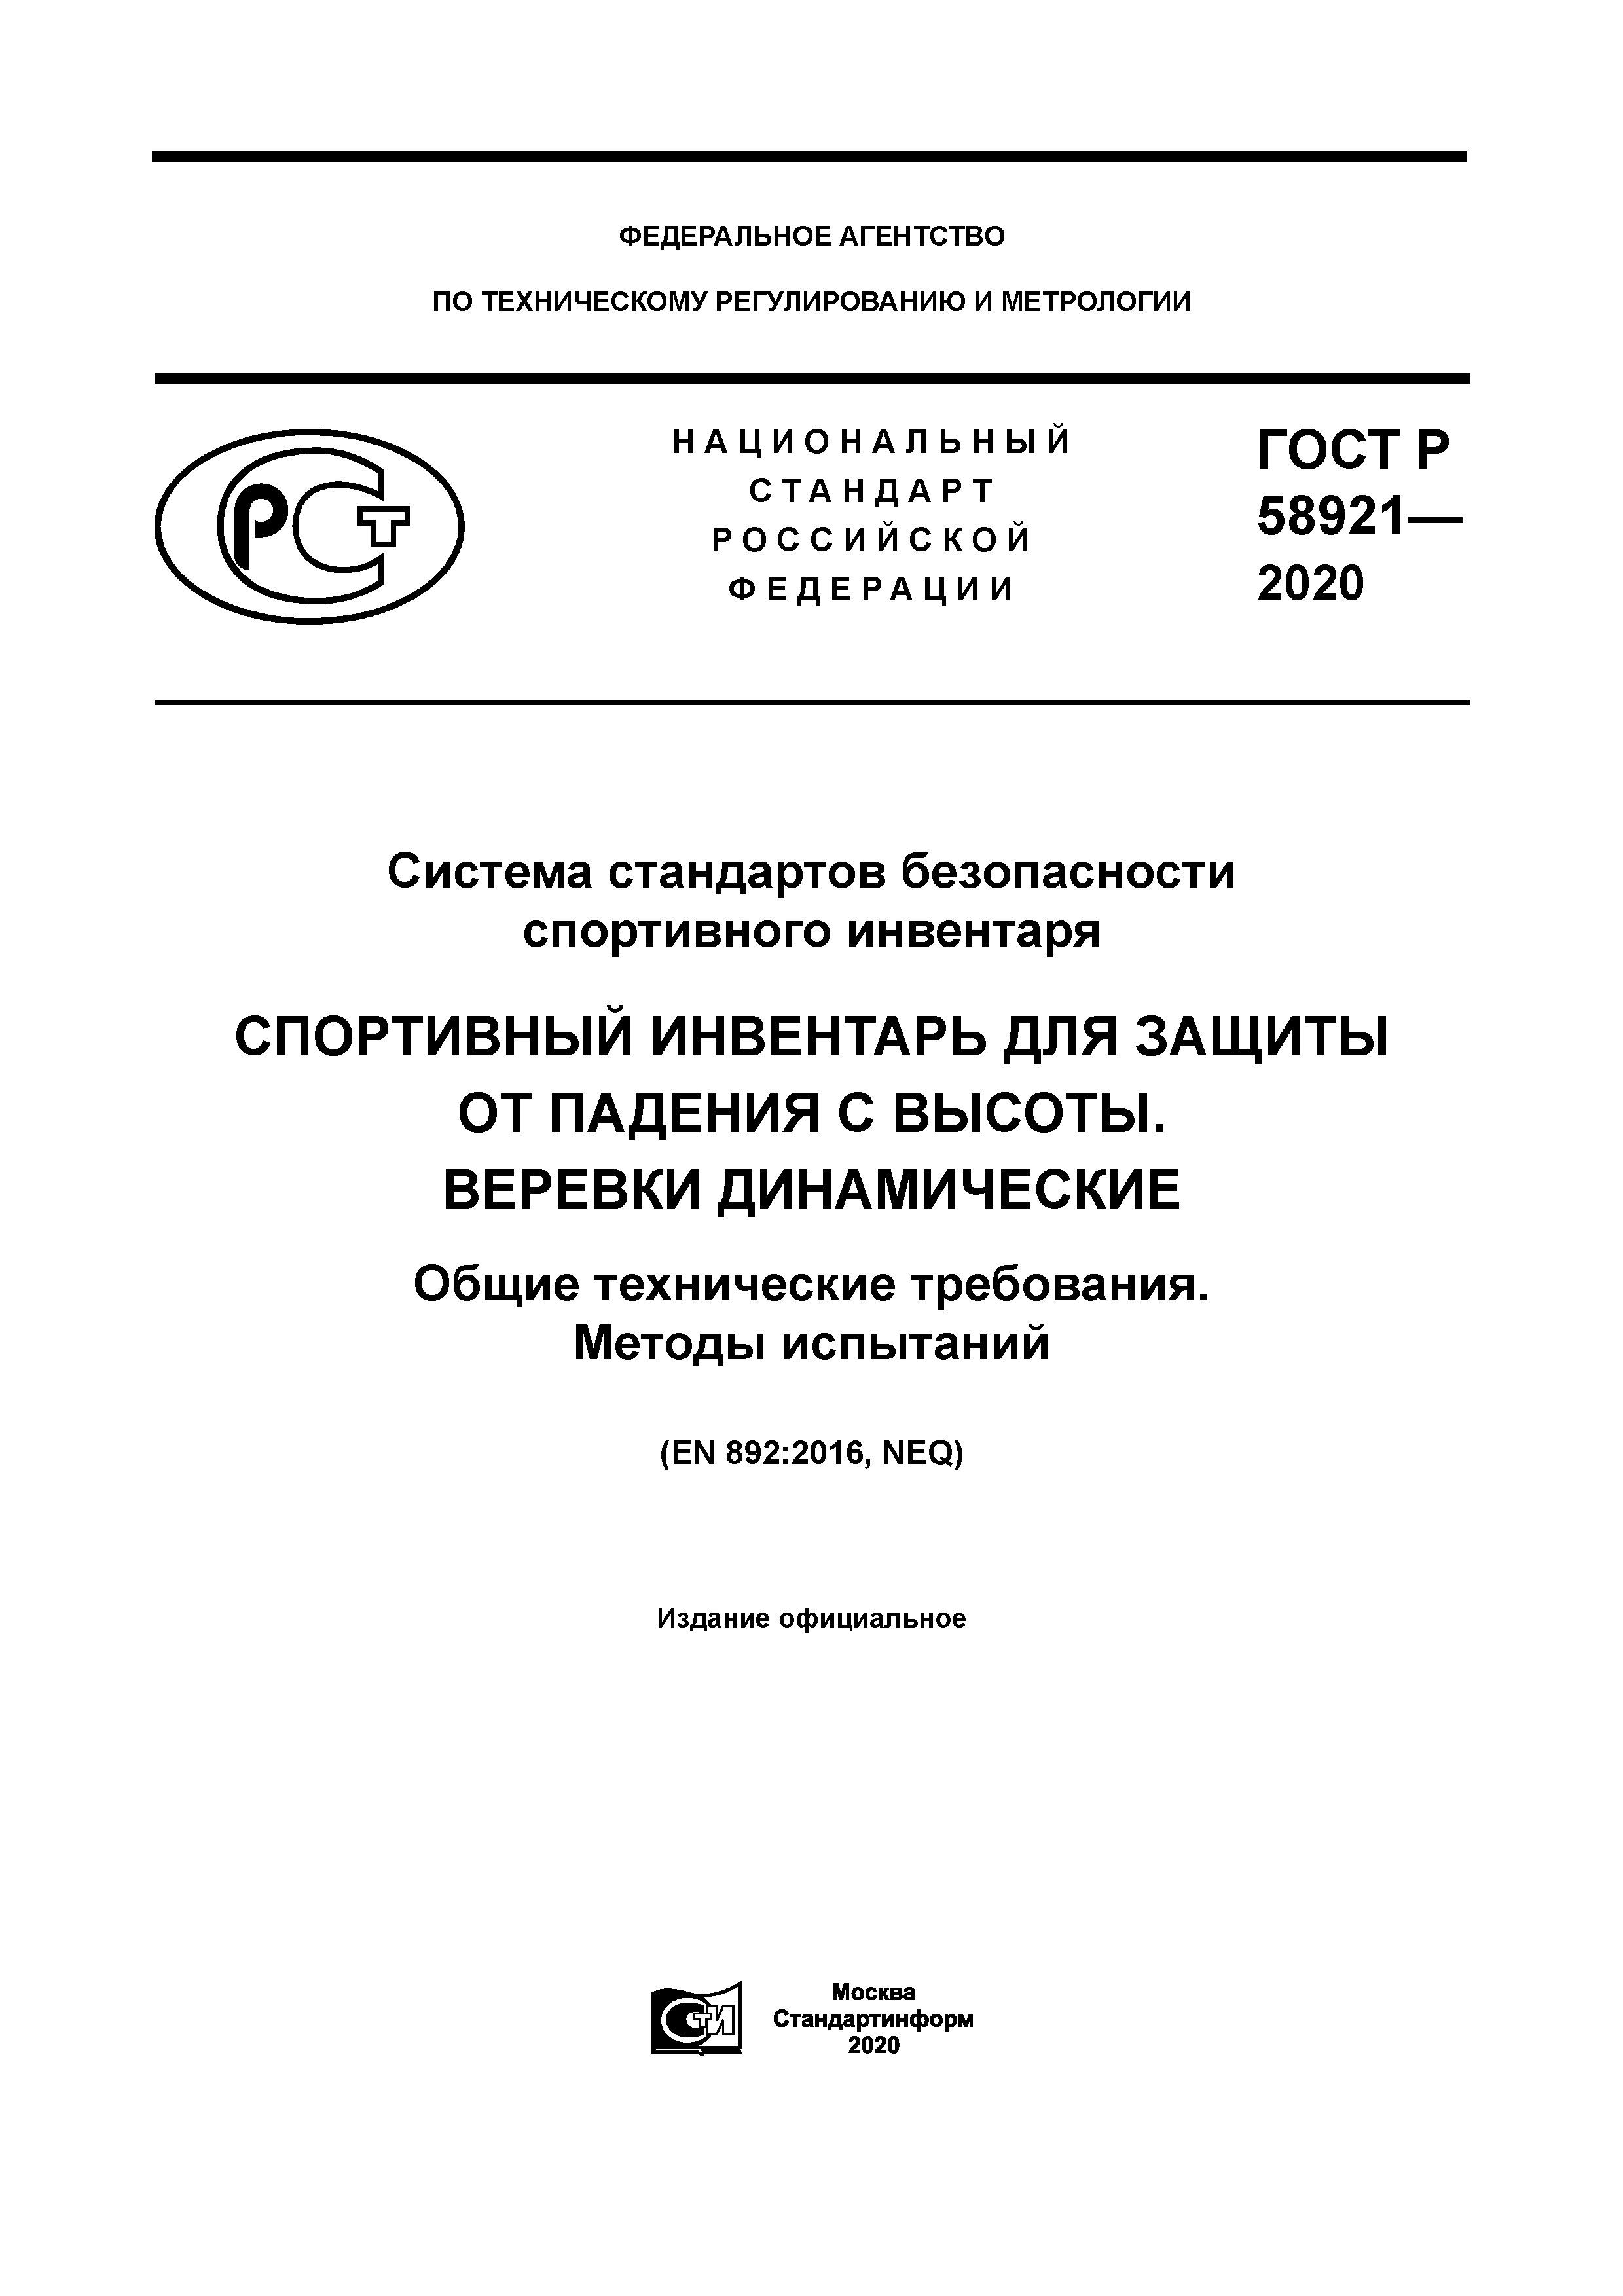 ГОСТ Р 58921-2020